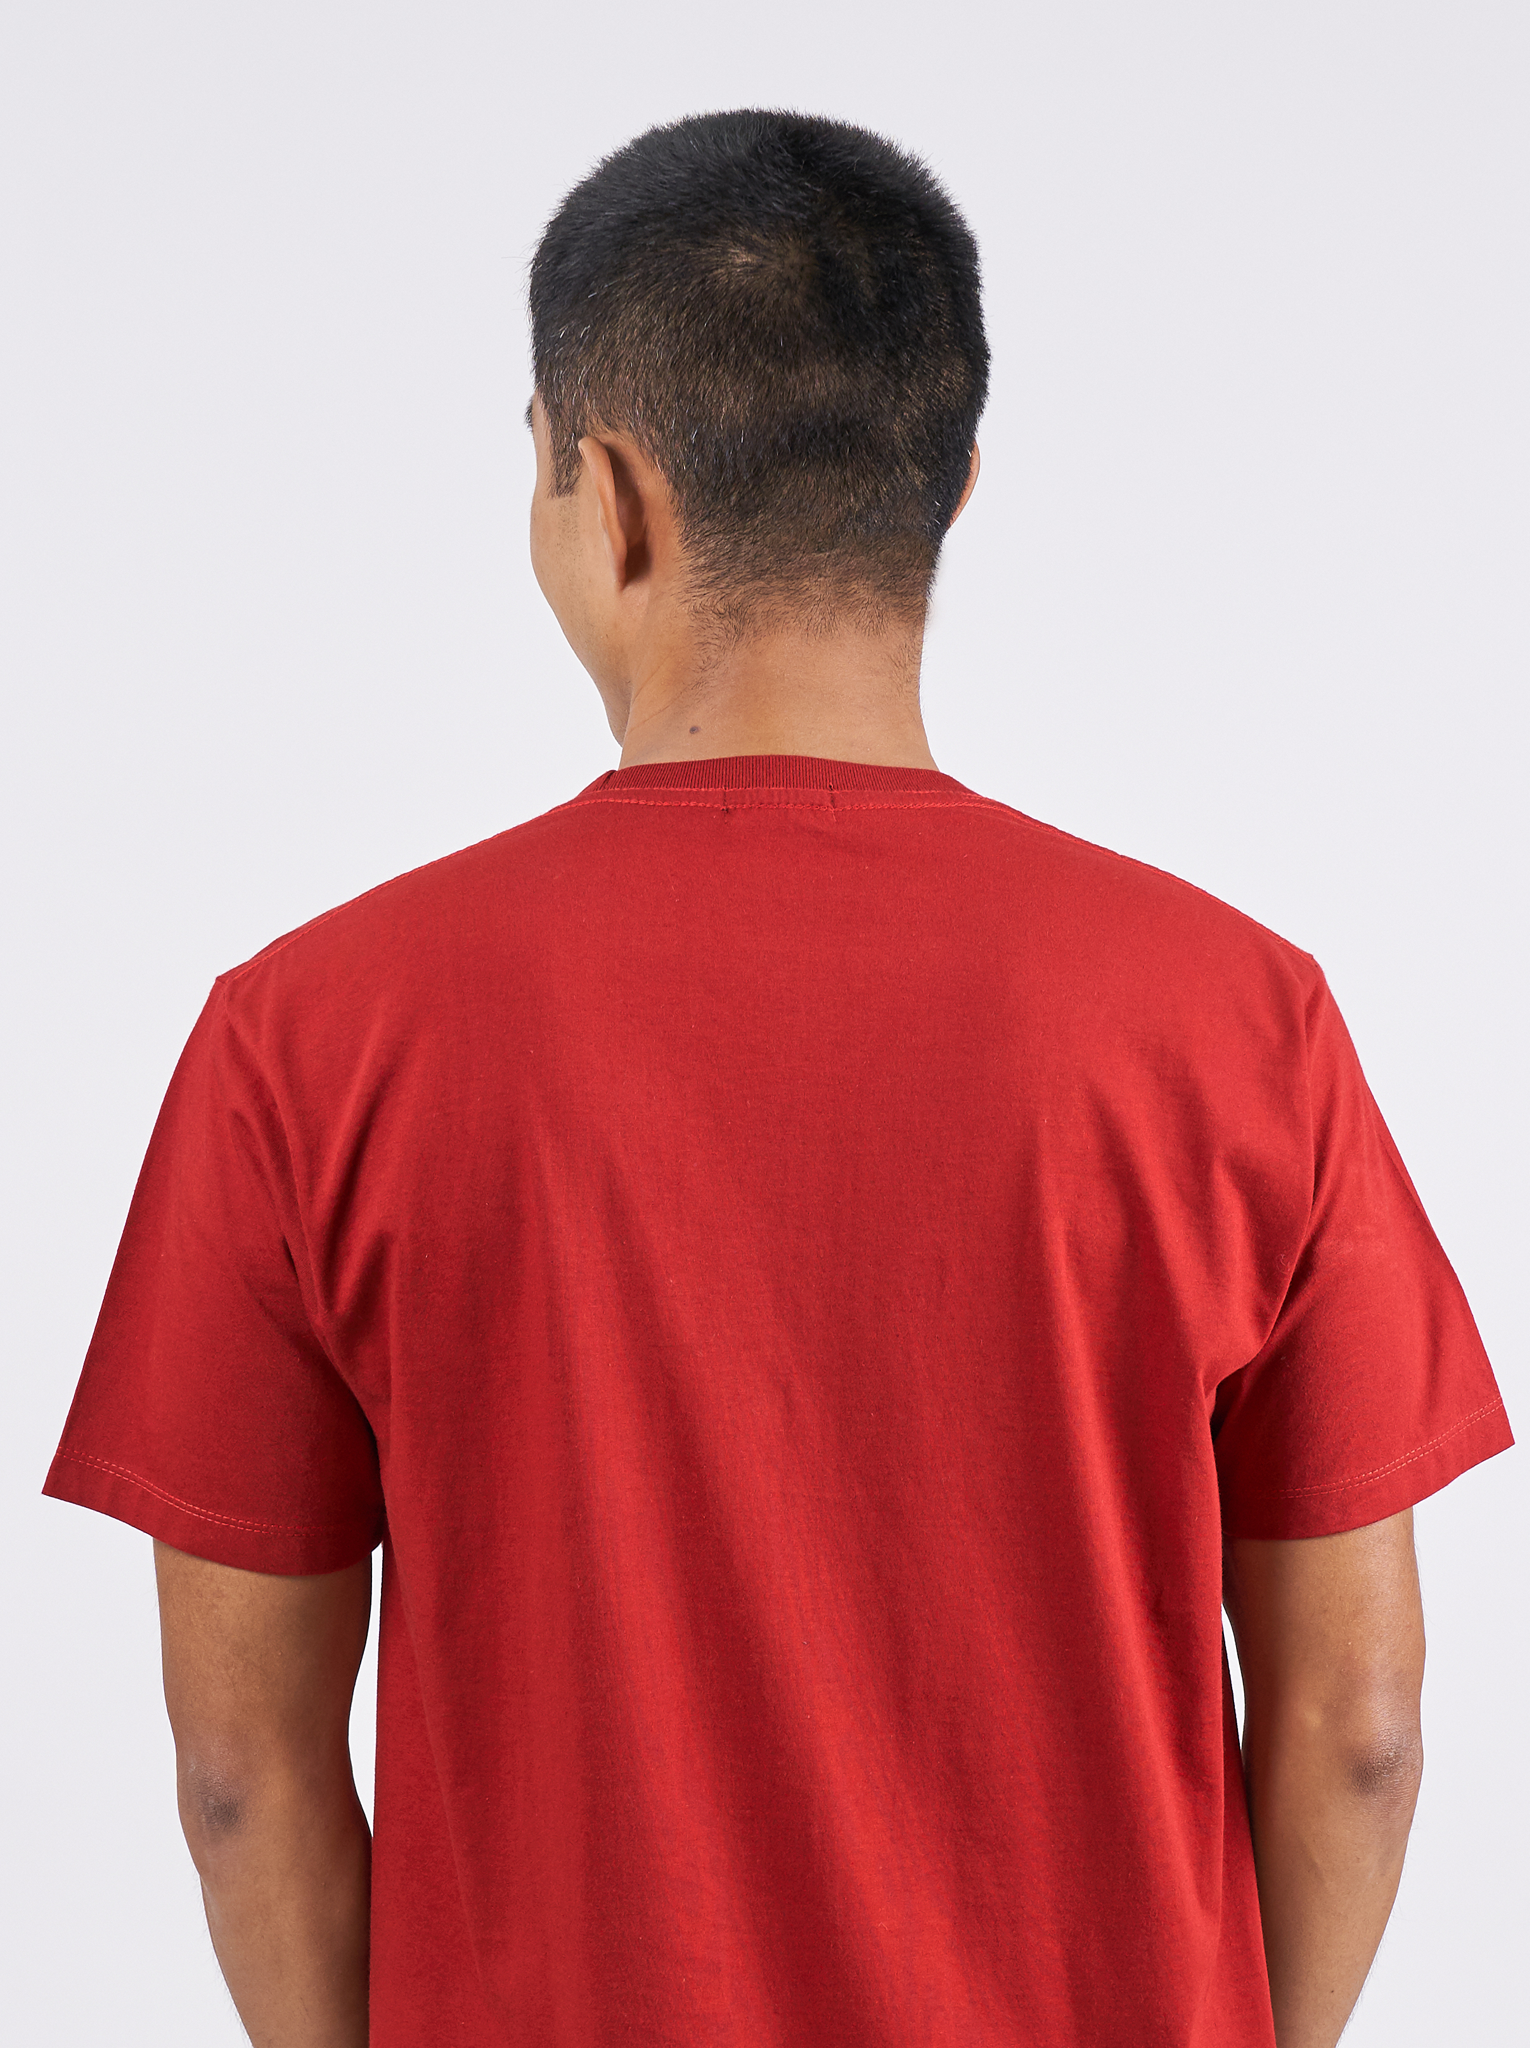 T-Shirt เสื้อยืด (Cherry Red, สีแดงเข้ม)(Unisex)